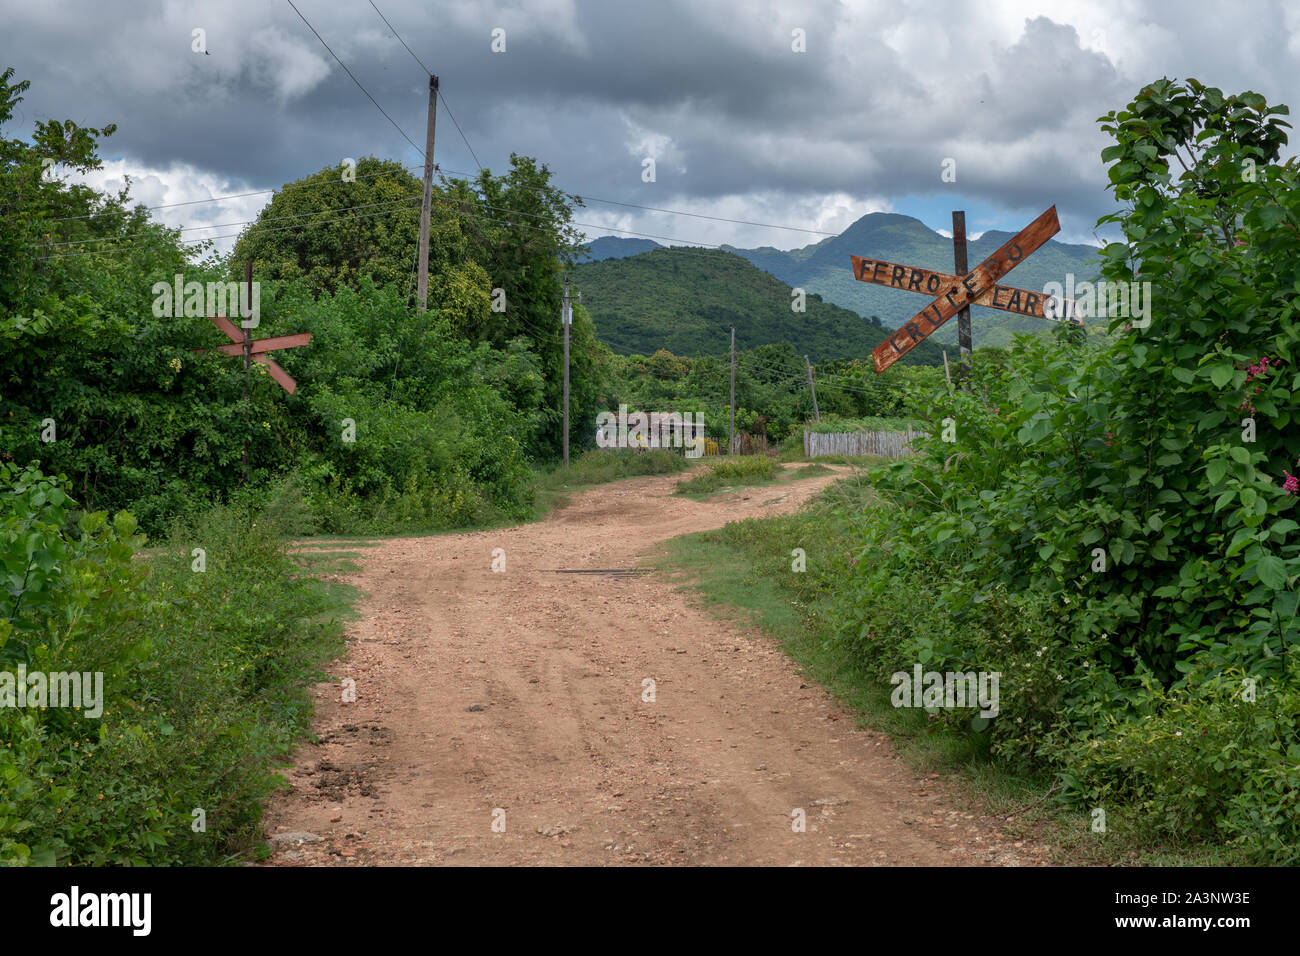 Rural scenery around the town of Trinidad de Cuba in October 2019 Stock Photo